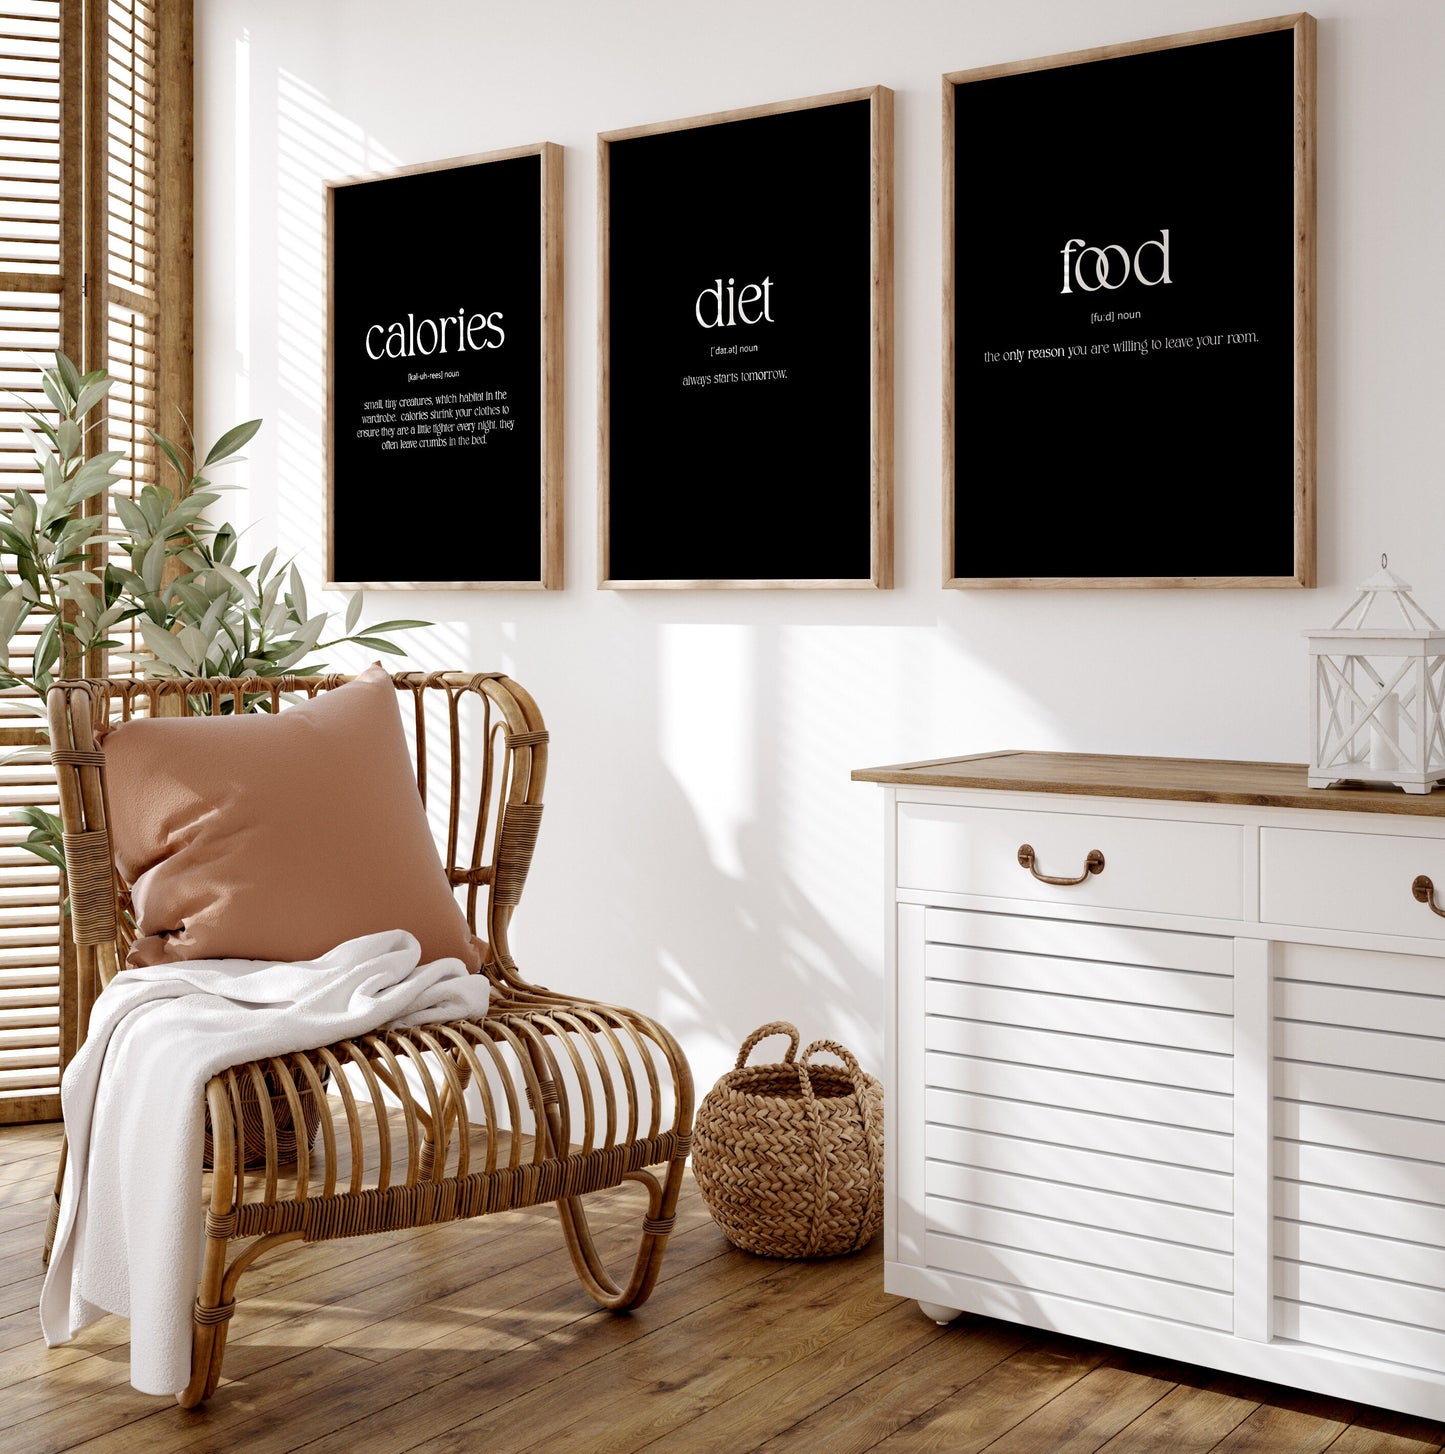 Calories, Diet, Food Set Of 3 Definition Prints - Magic Posters